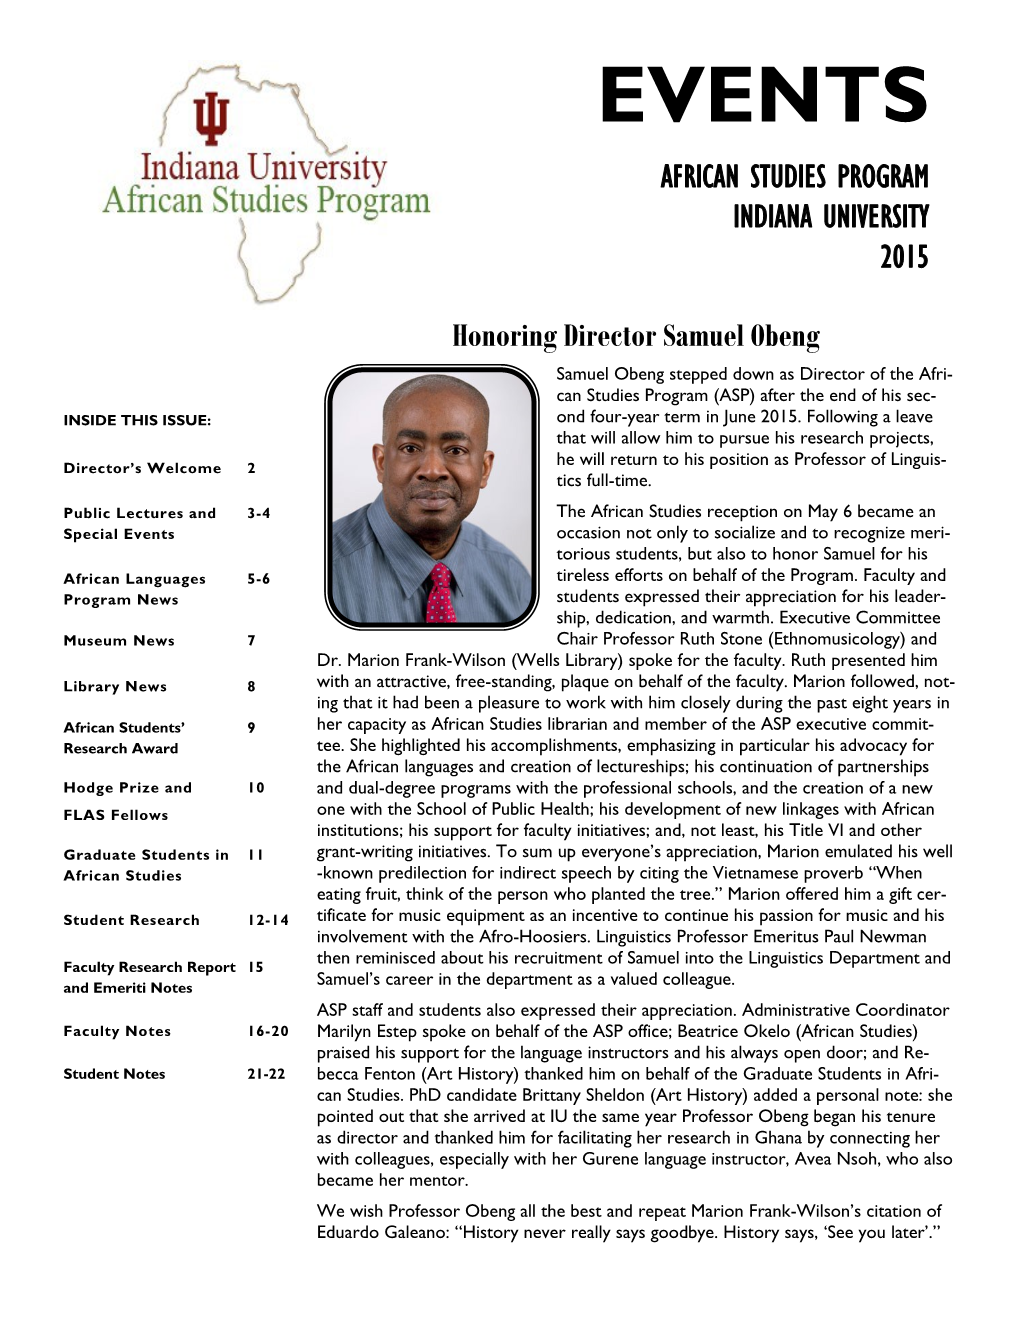 Events African Studies Program Indiana University 2015